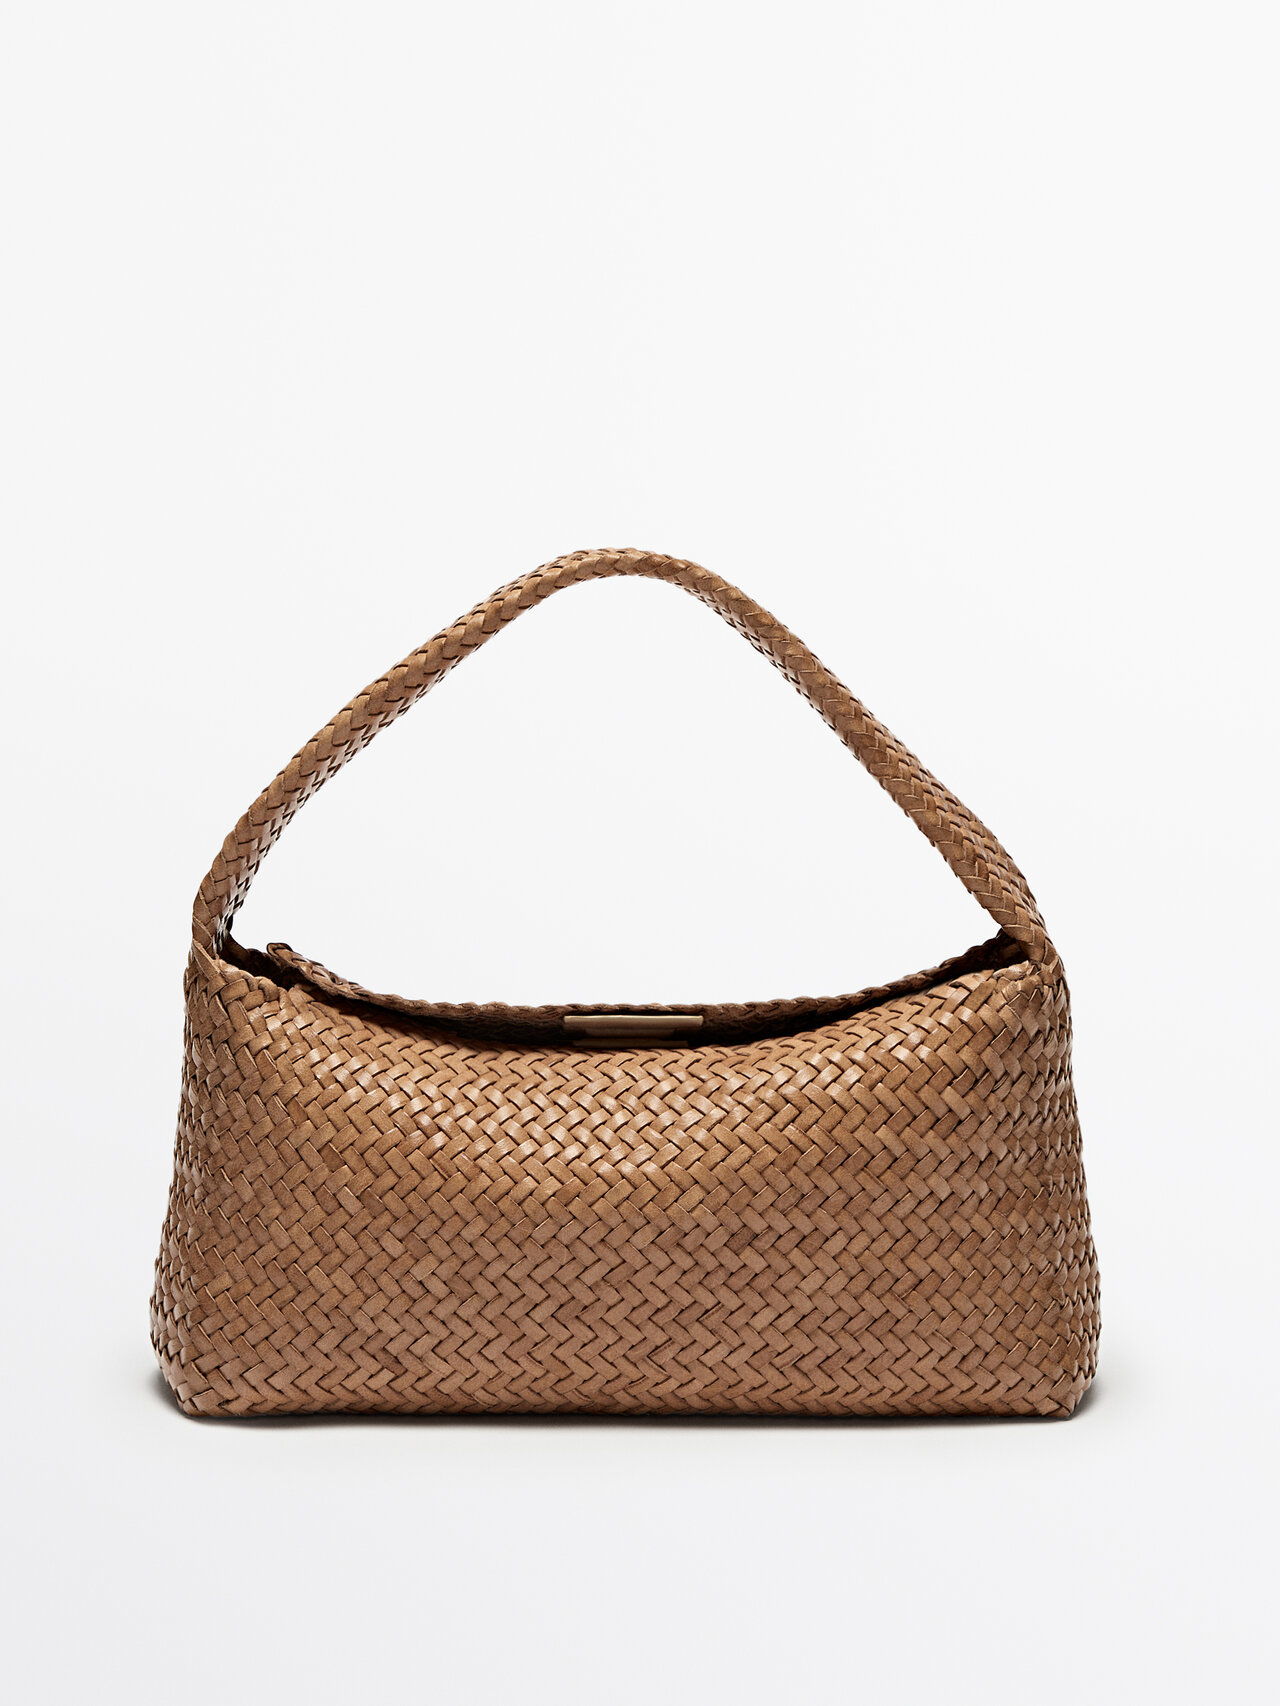 Massimo Dutti Woven Nappa Leather Bag In Brown